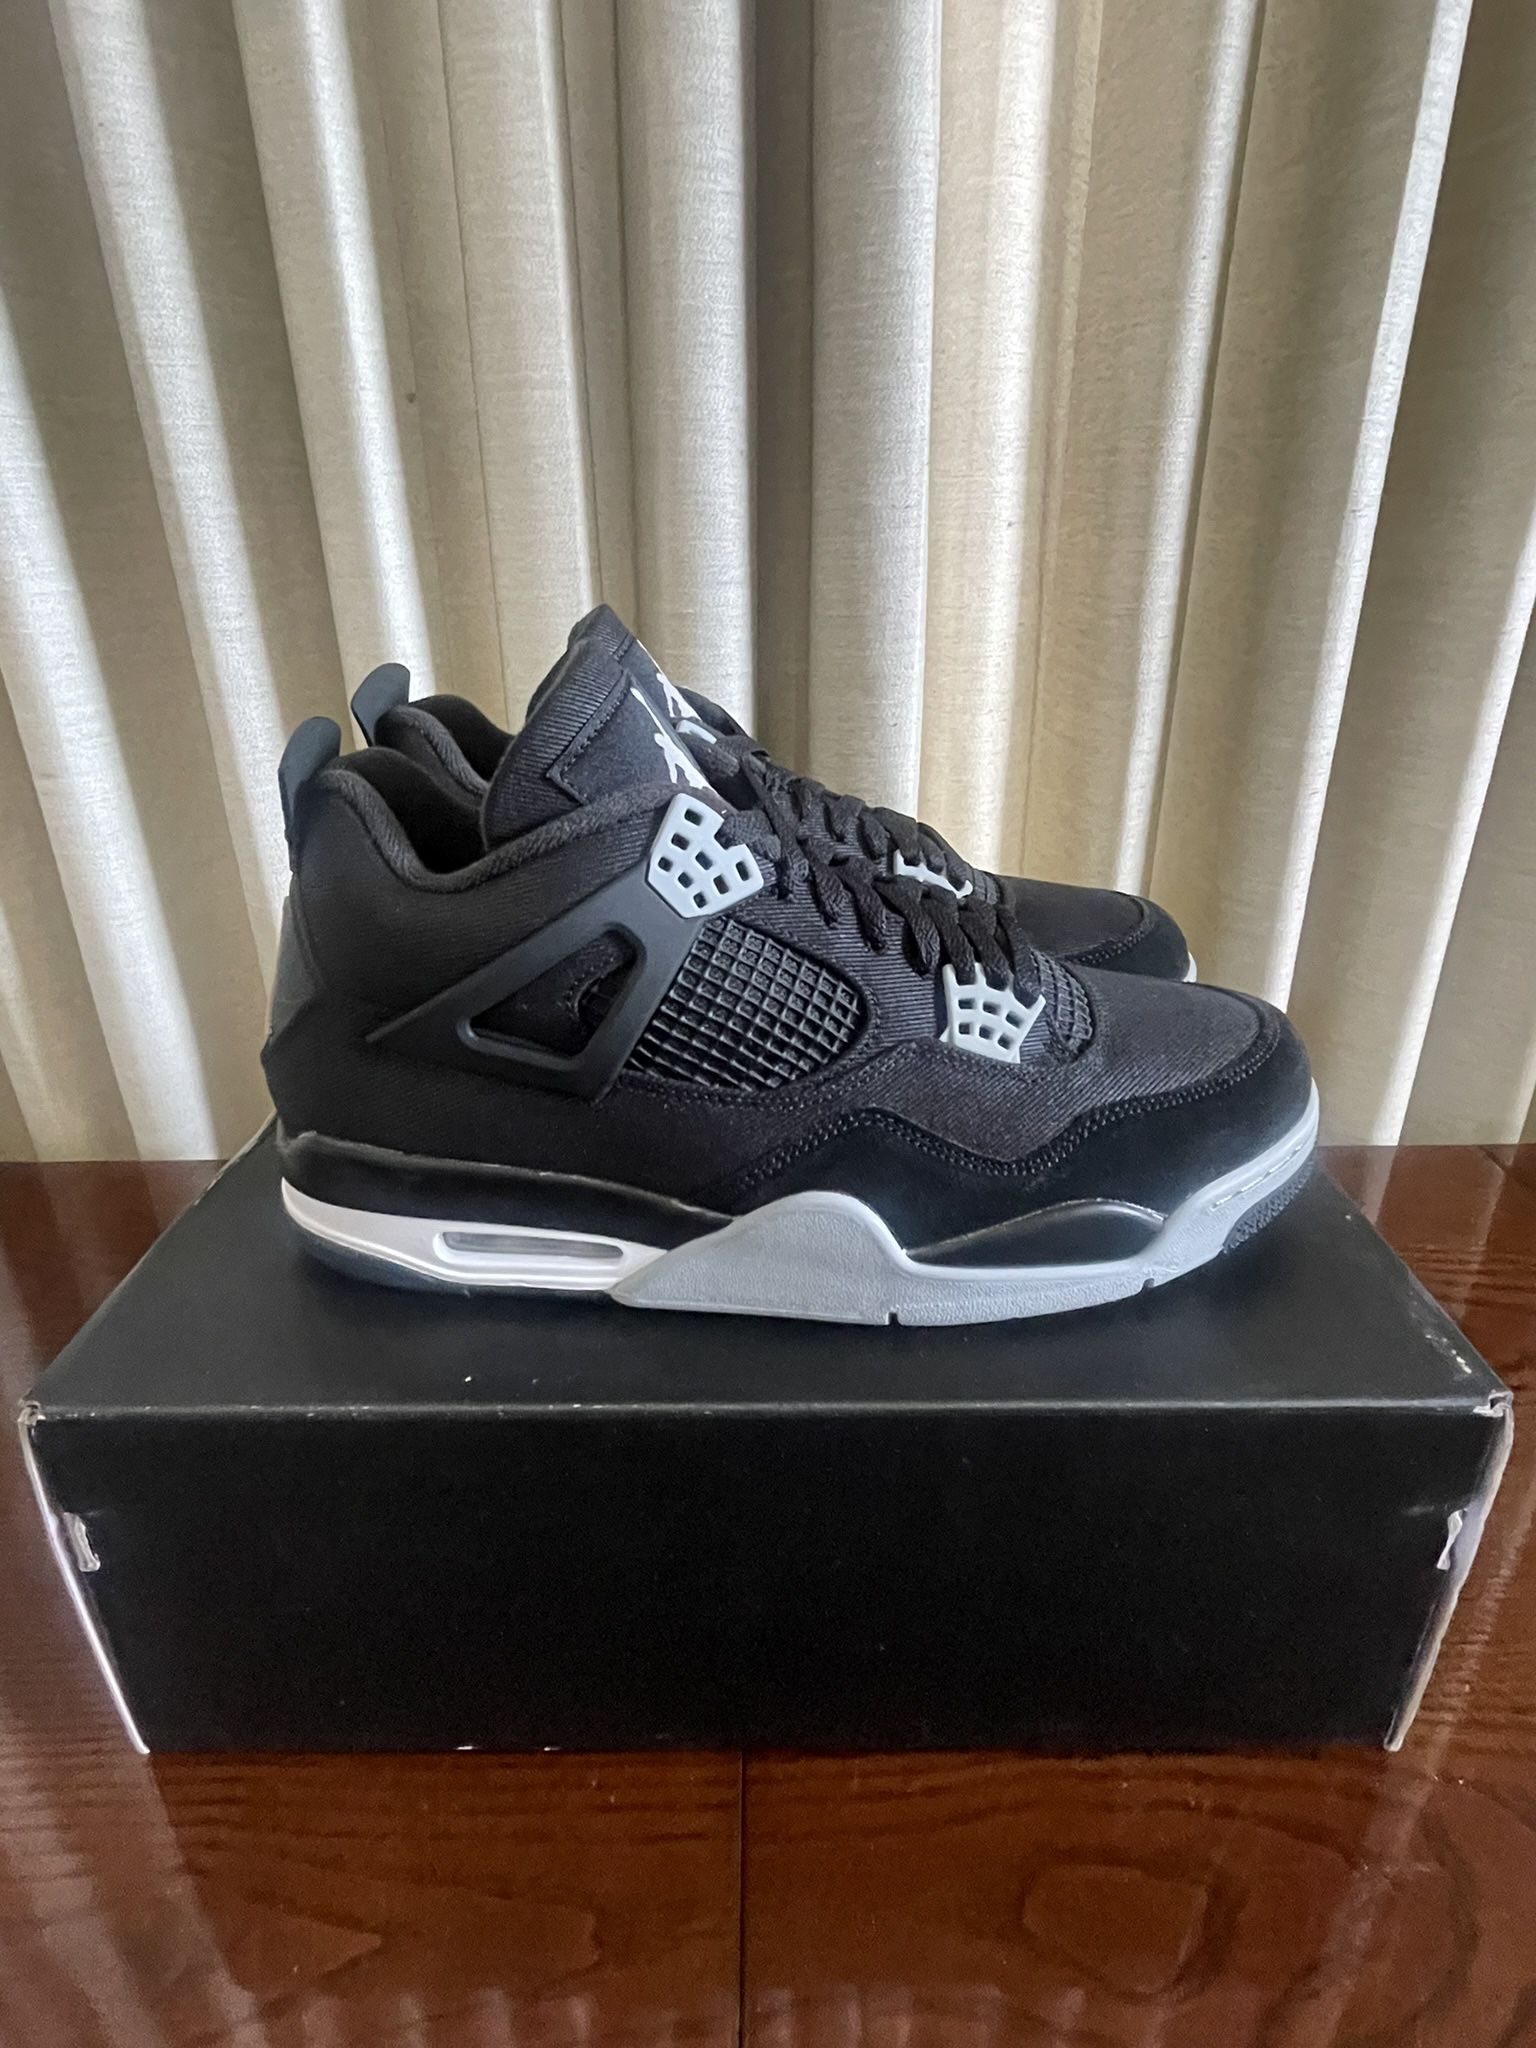 Air Jordan 4 “Black Canvas” Size 10.5 